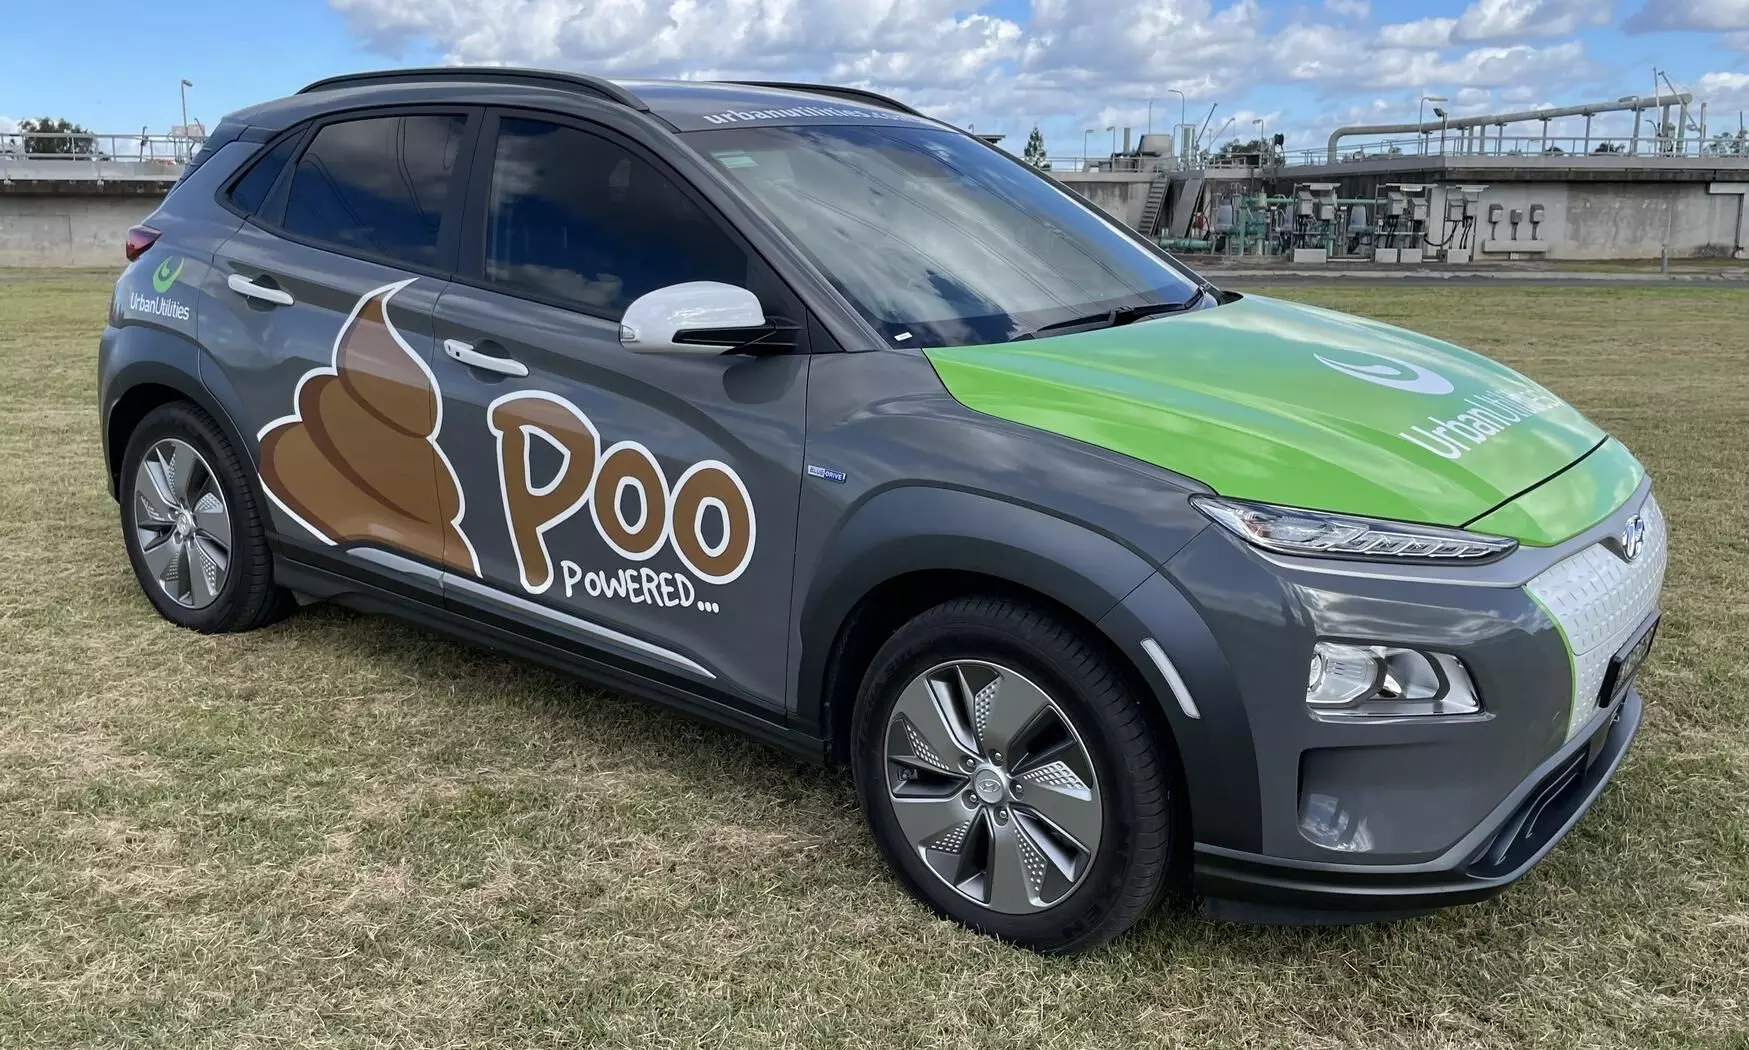 Aussie company uses poo power to propel Hyundai